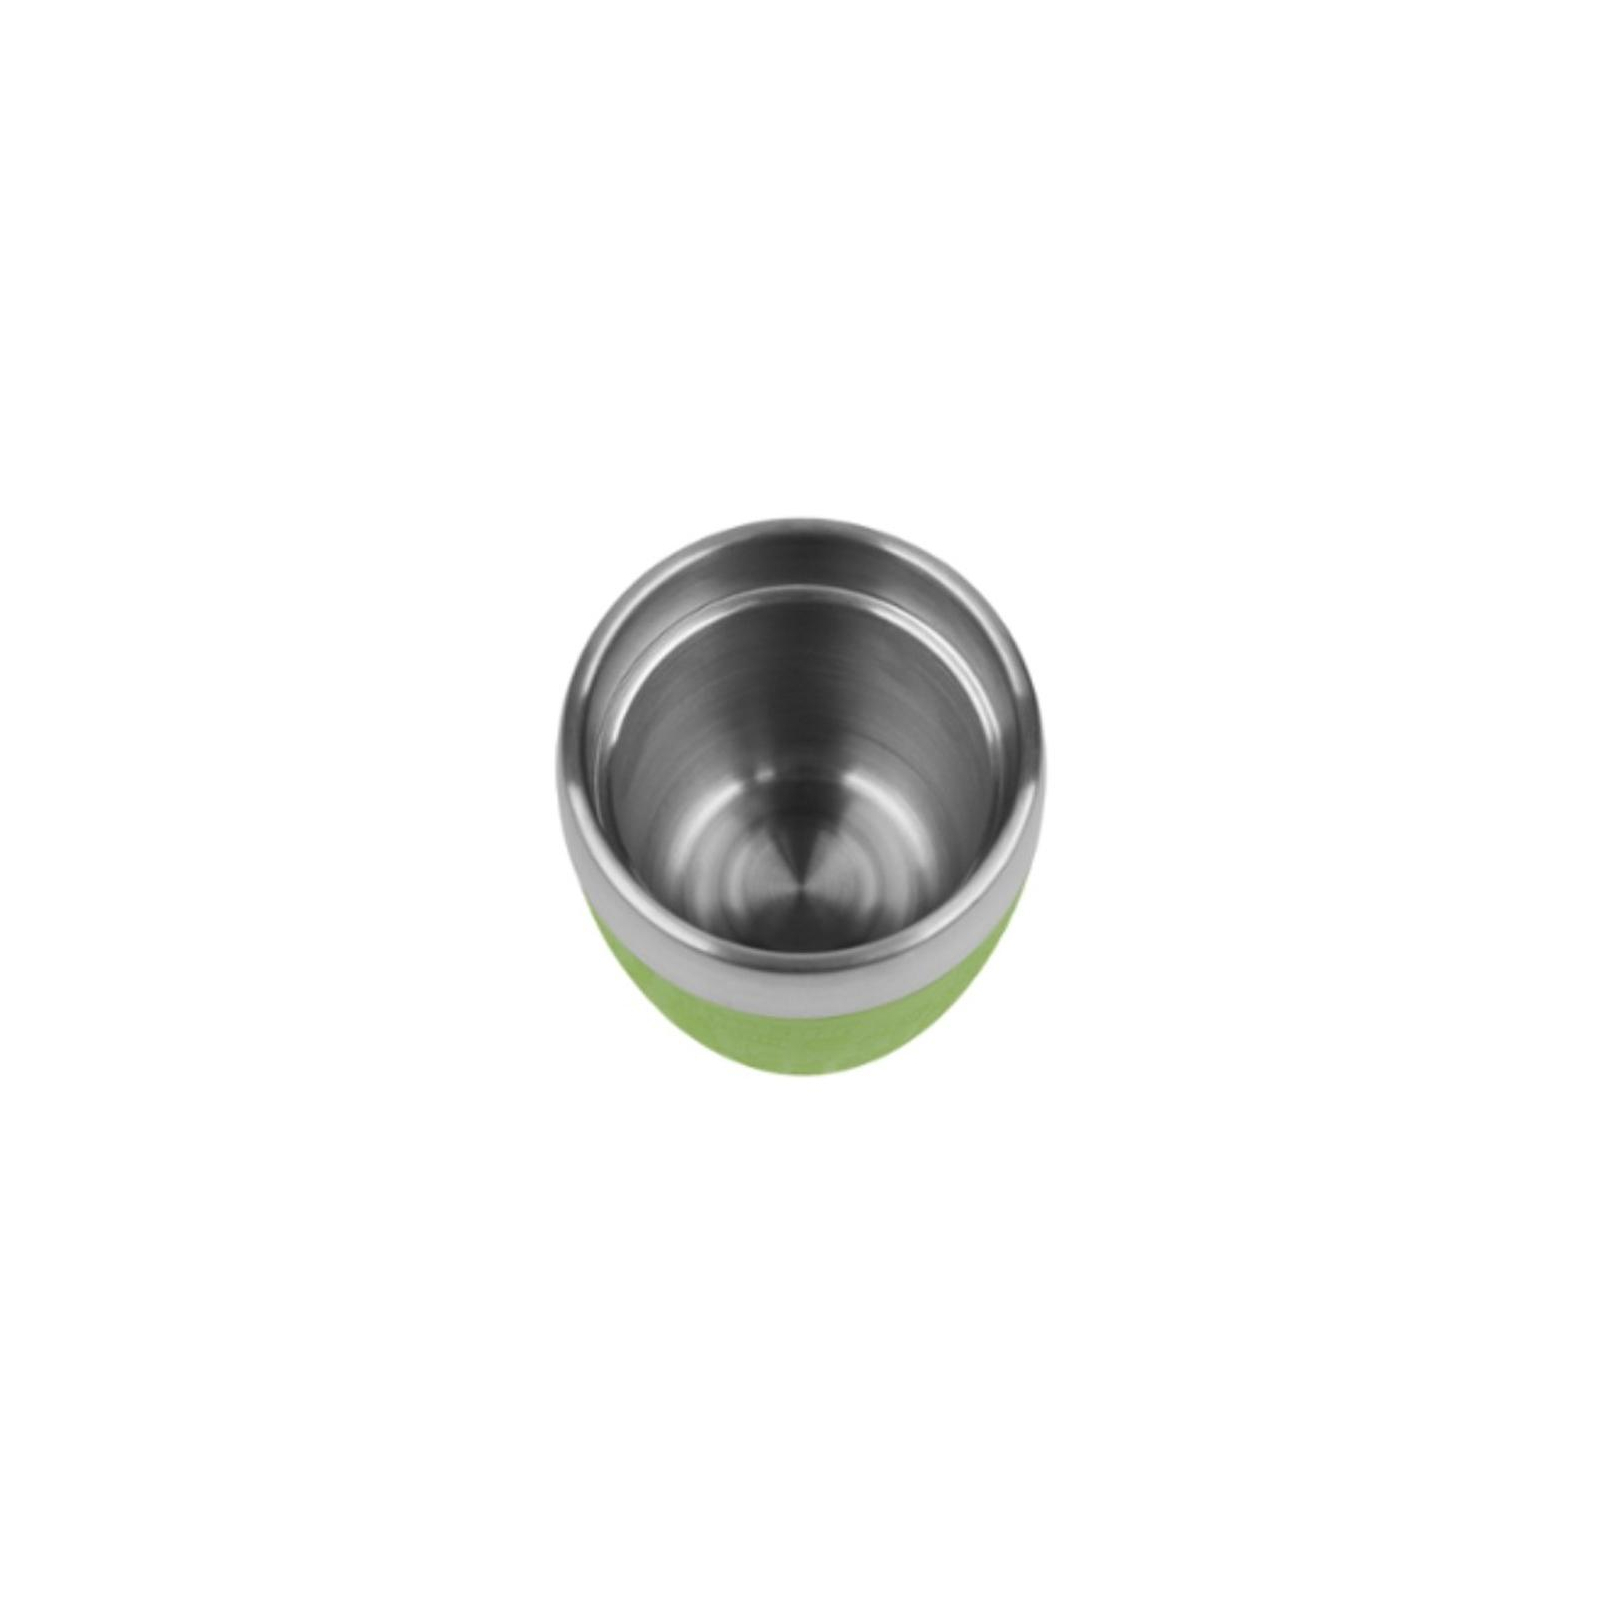 Термокружка Tefal TRAVEL CUP 0.2L silver/lime (K3080314) изображение 4